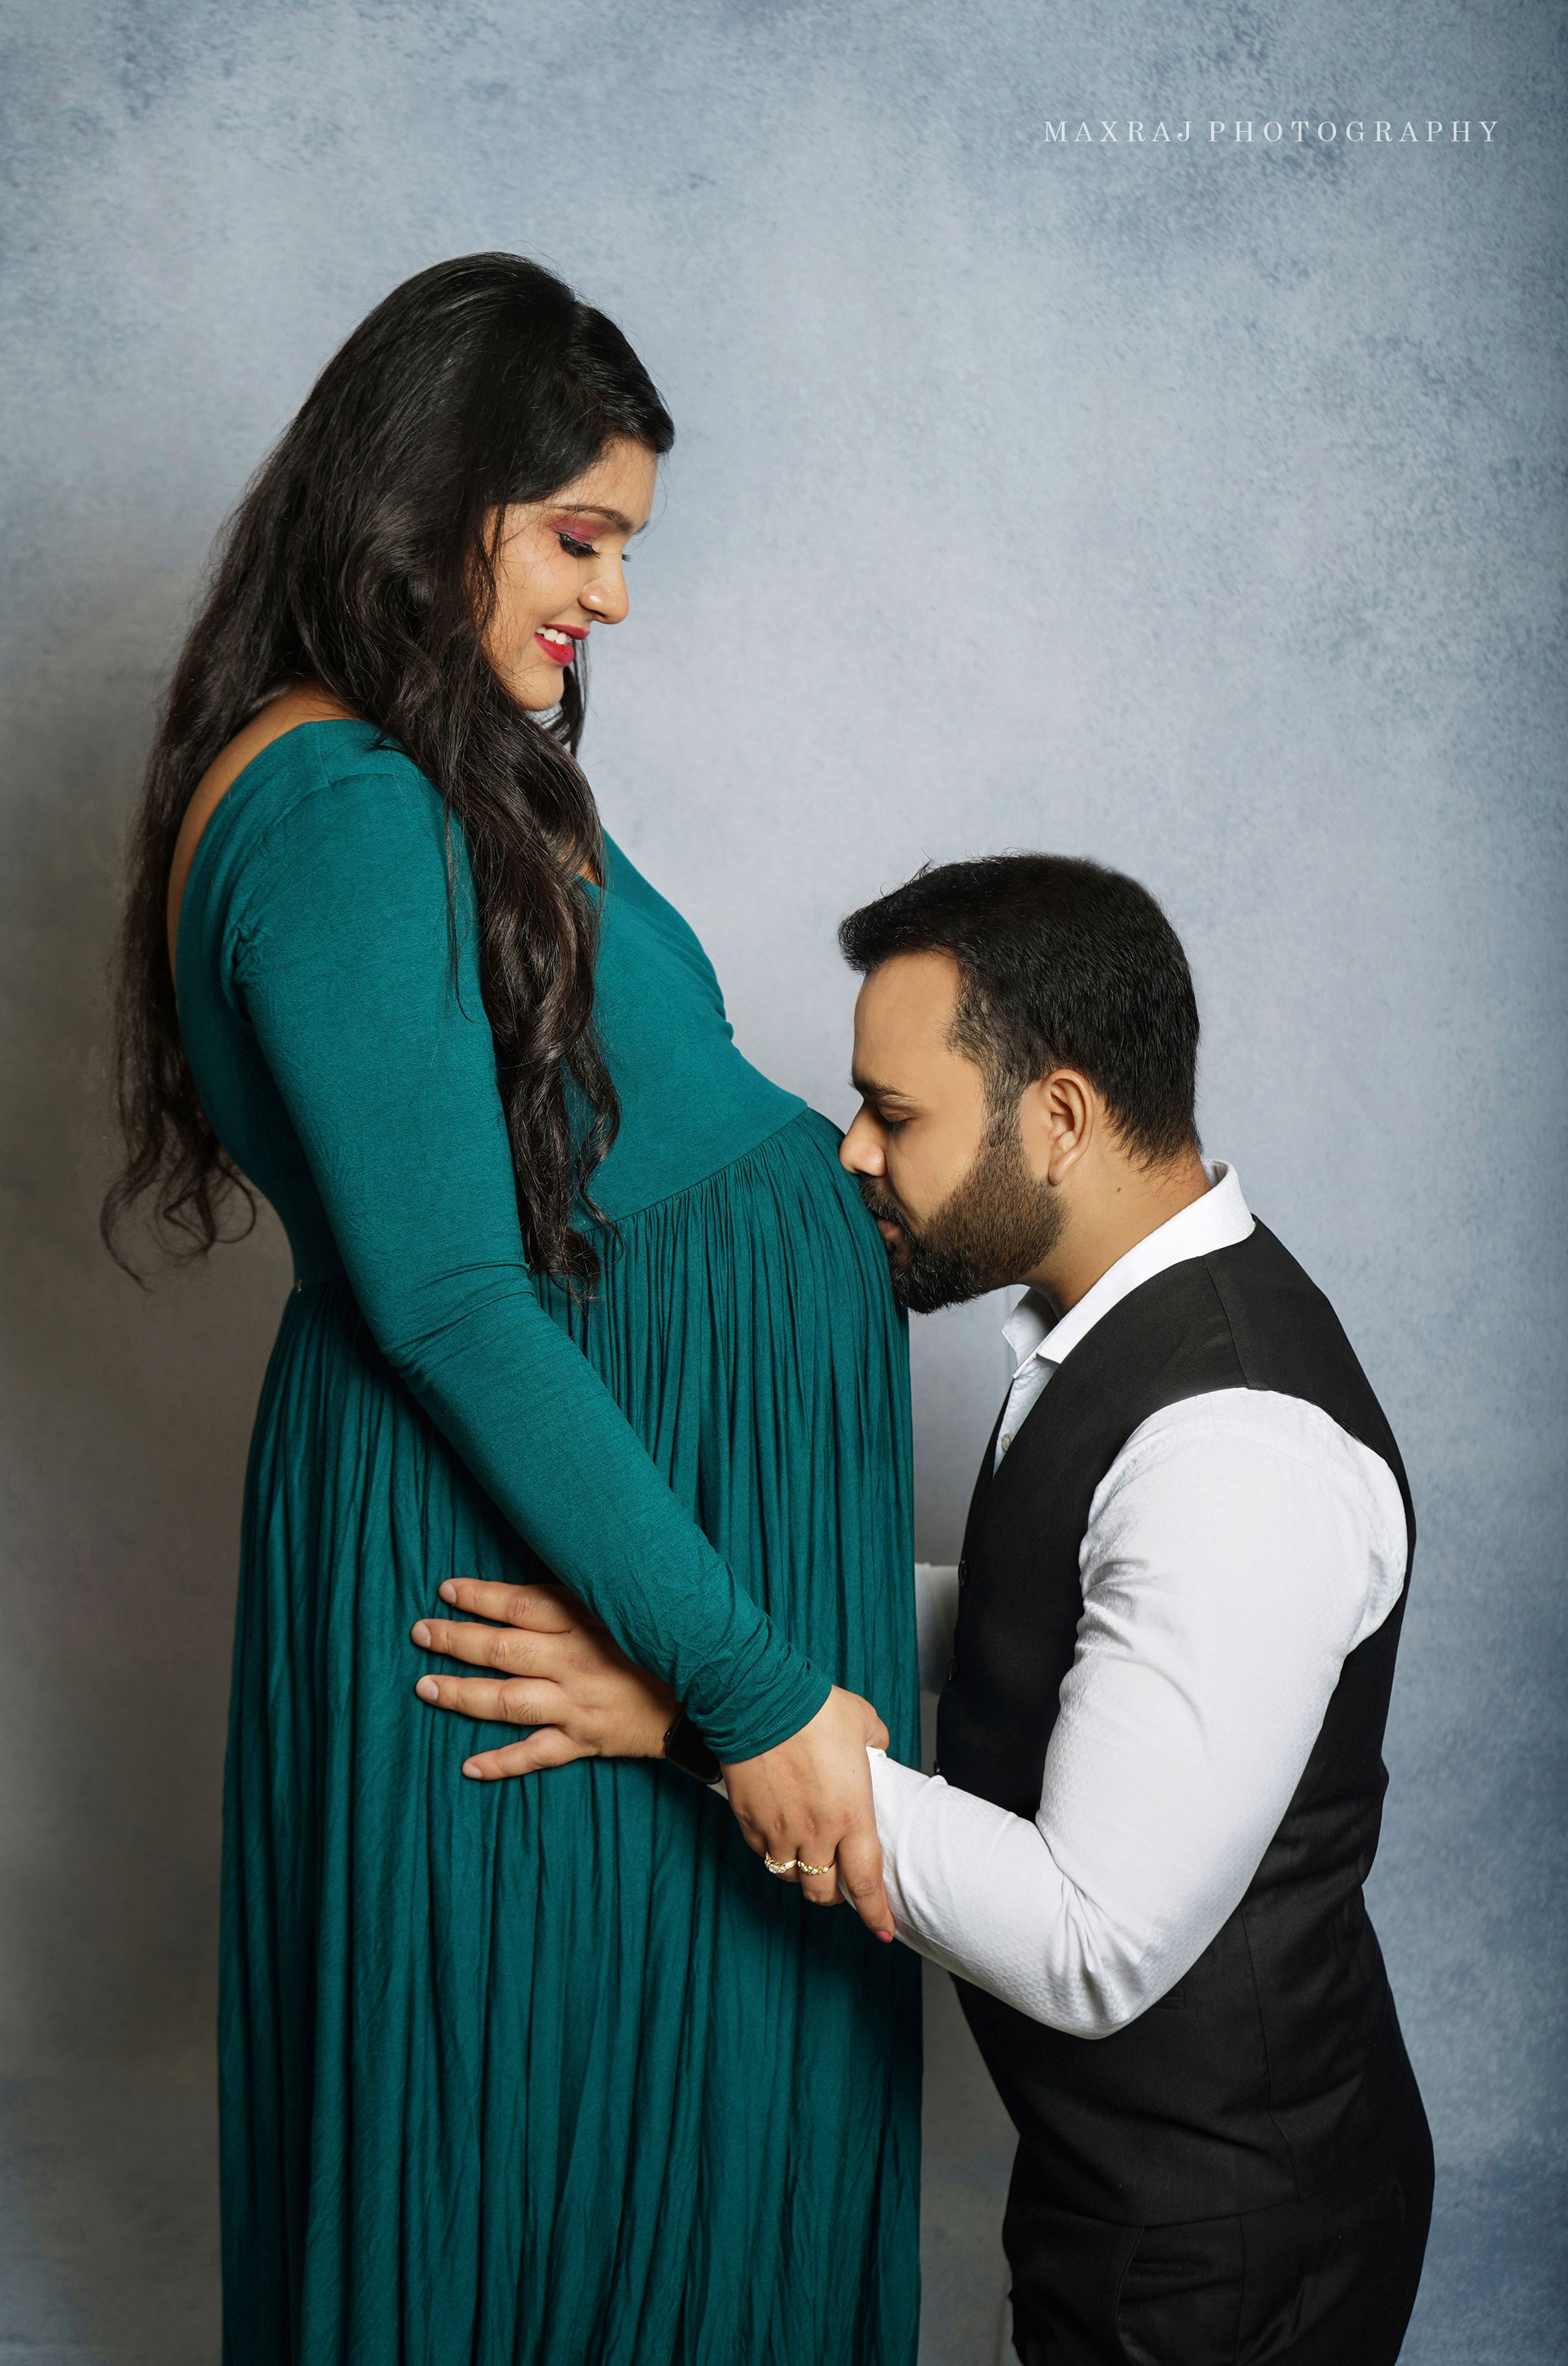 maternity photographer in pune, maternity photoshoot poses,  indoor maternity photoshoot ideas